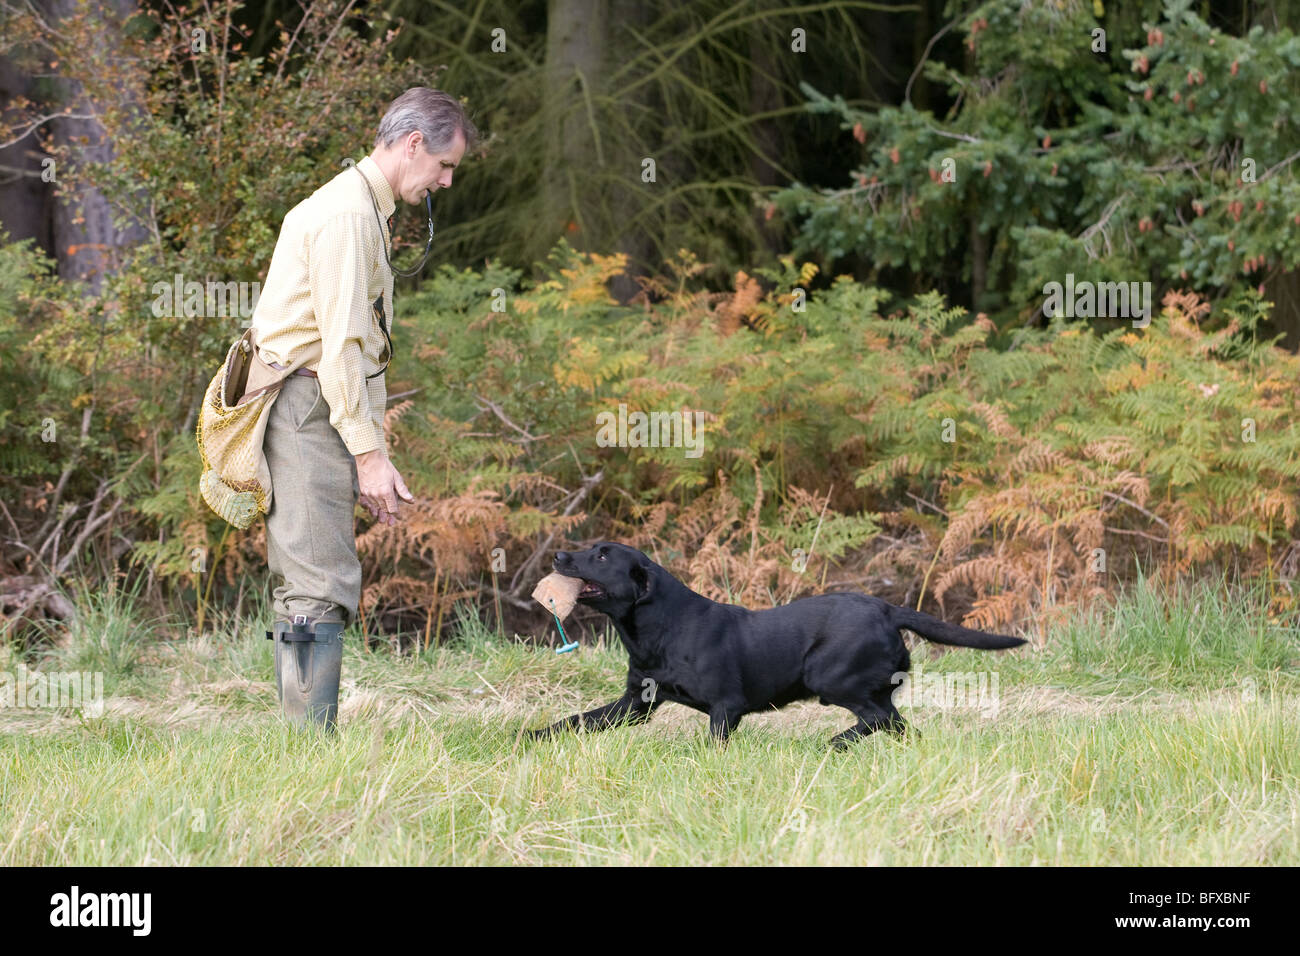 Dog Trainer With A Labrador Gun Dog Retrieving A Training Dummy Stock Photo